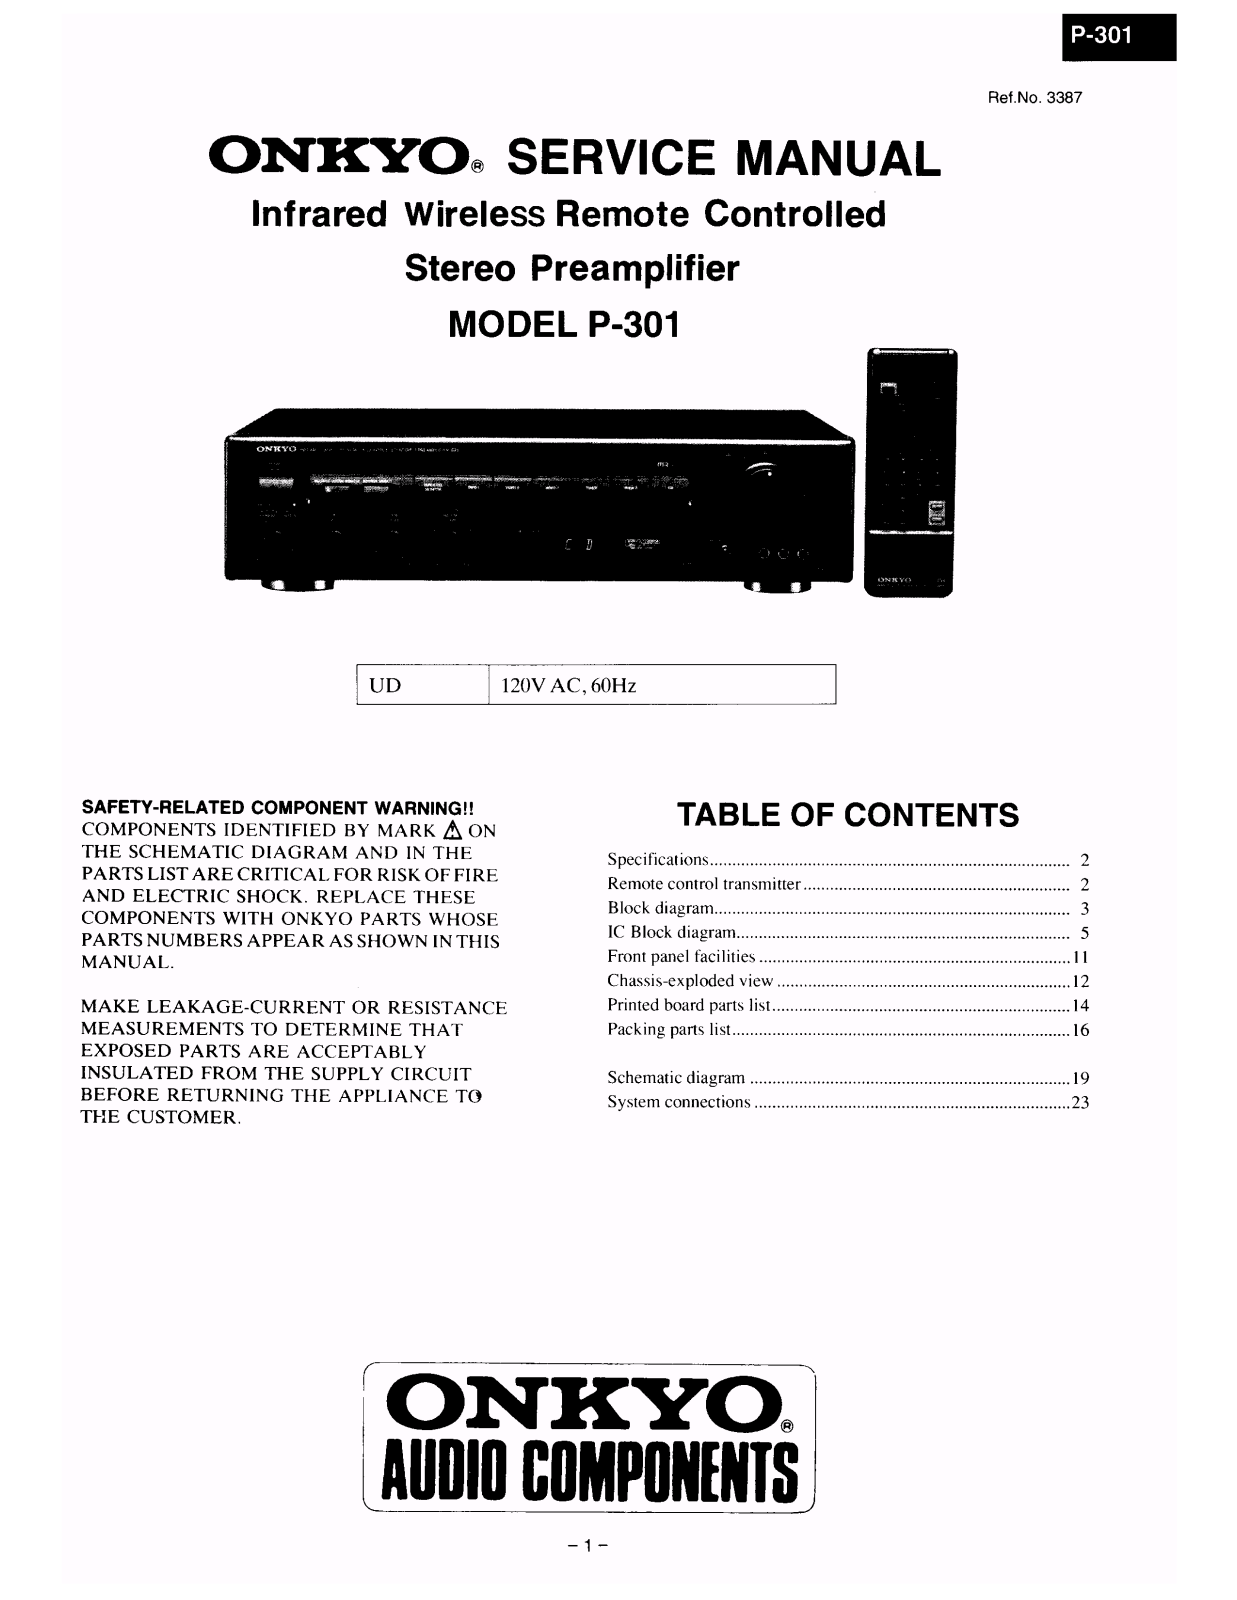 Onkyo P-301 Service manual